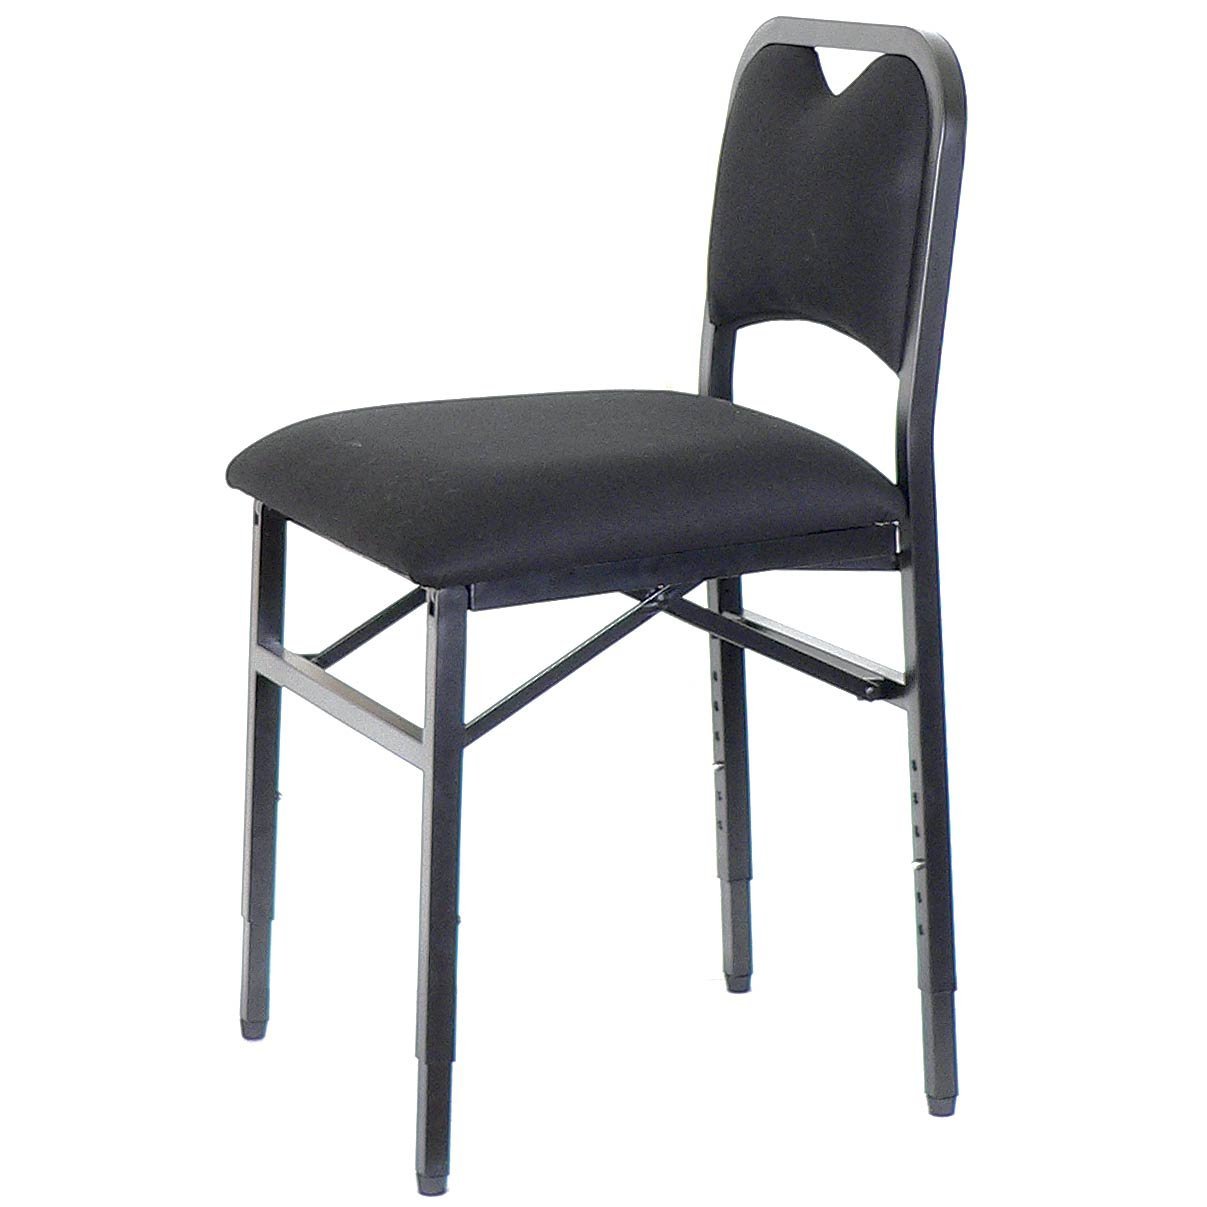 Adjustrite Folding Musician's Chair Tall